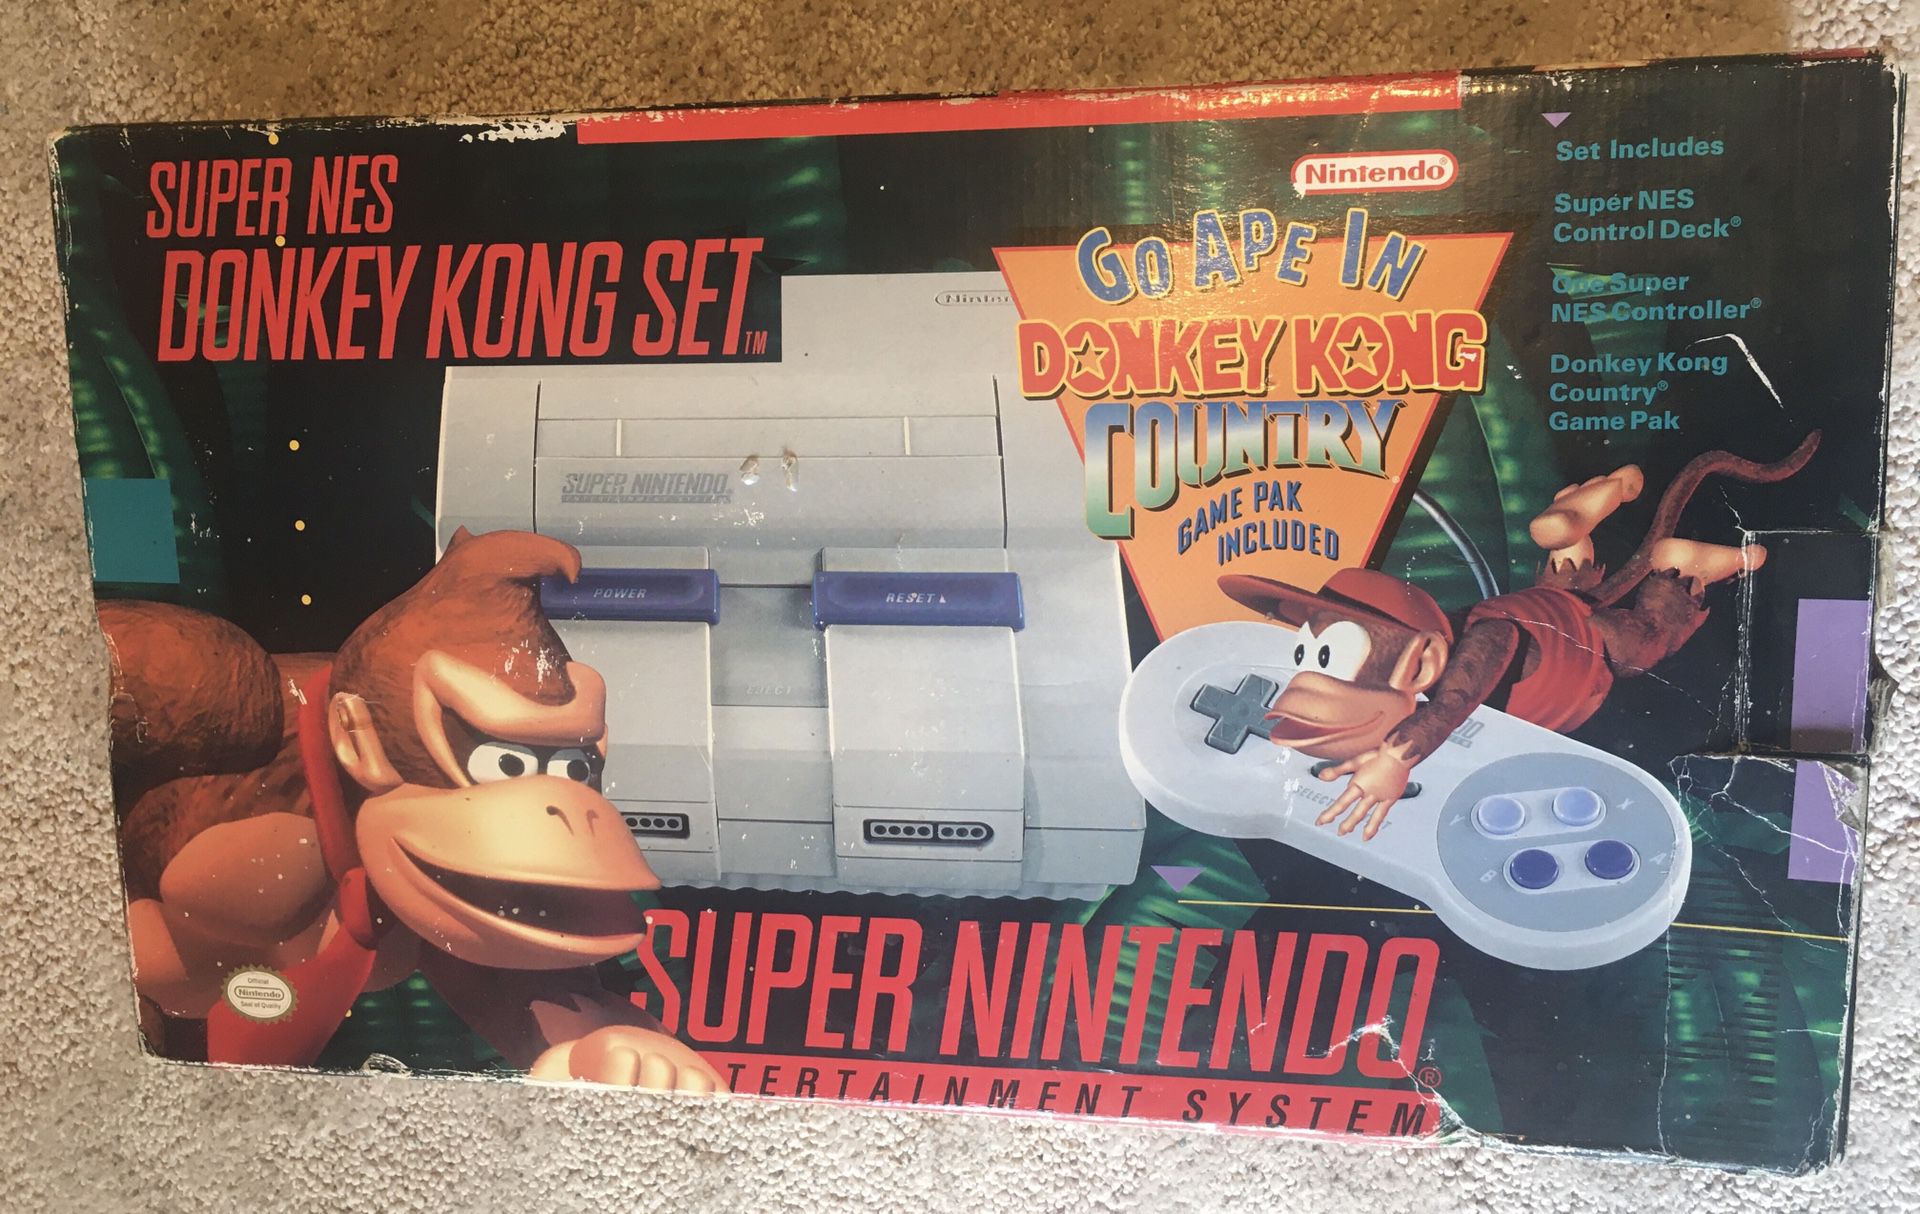 Super Nintendo SNES Donkey Kong Console Set